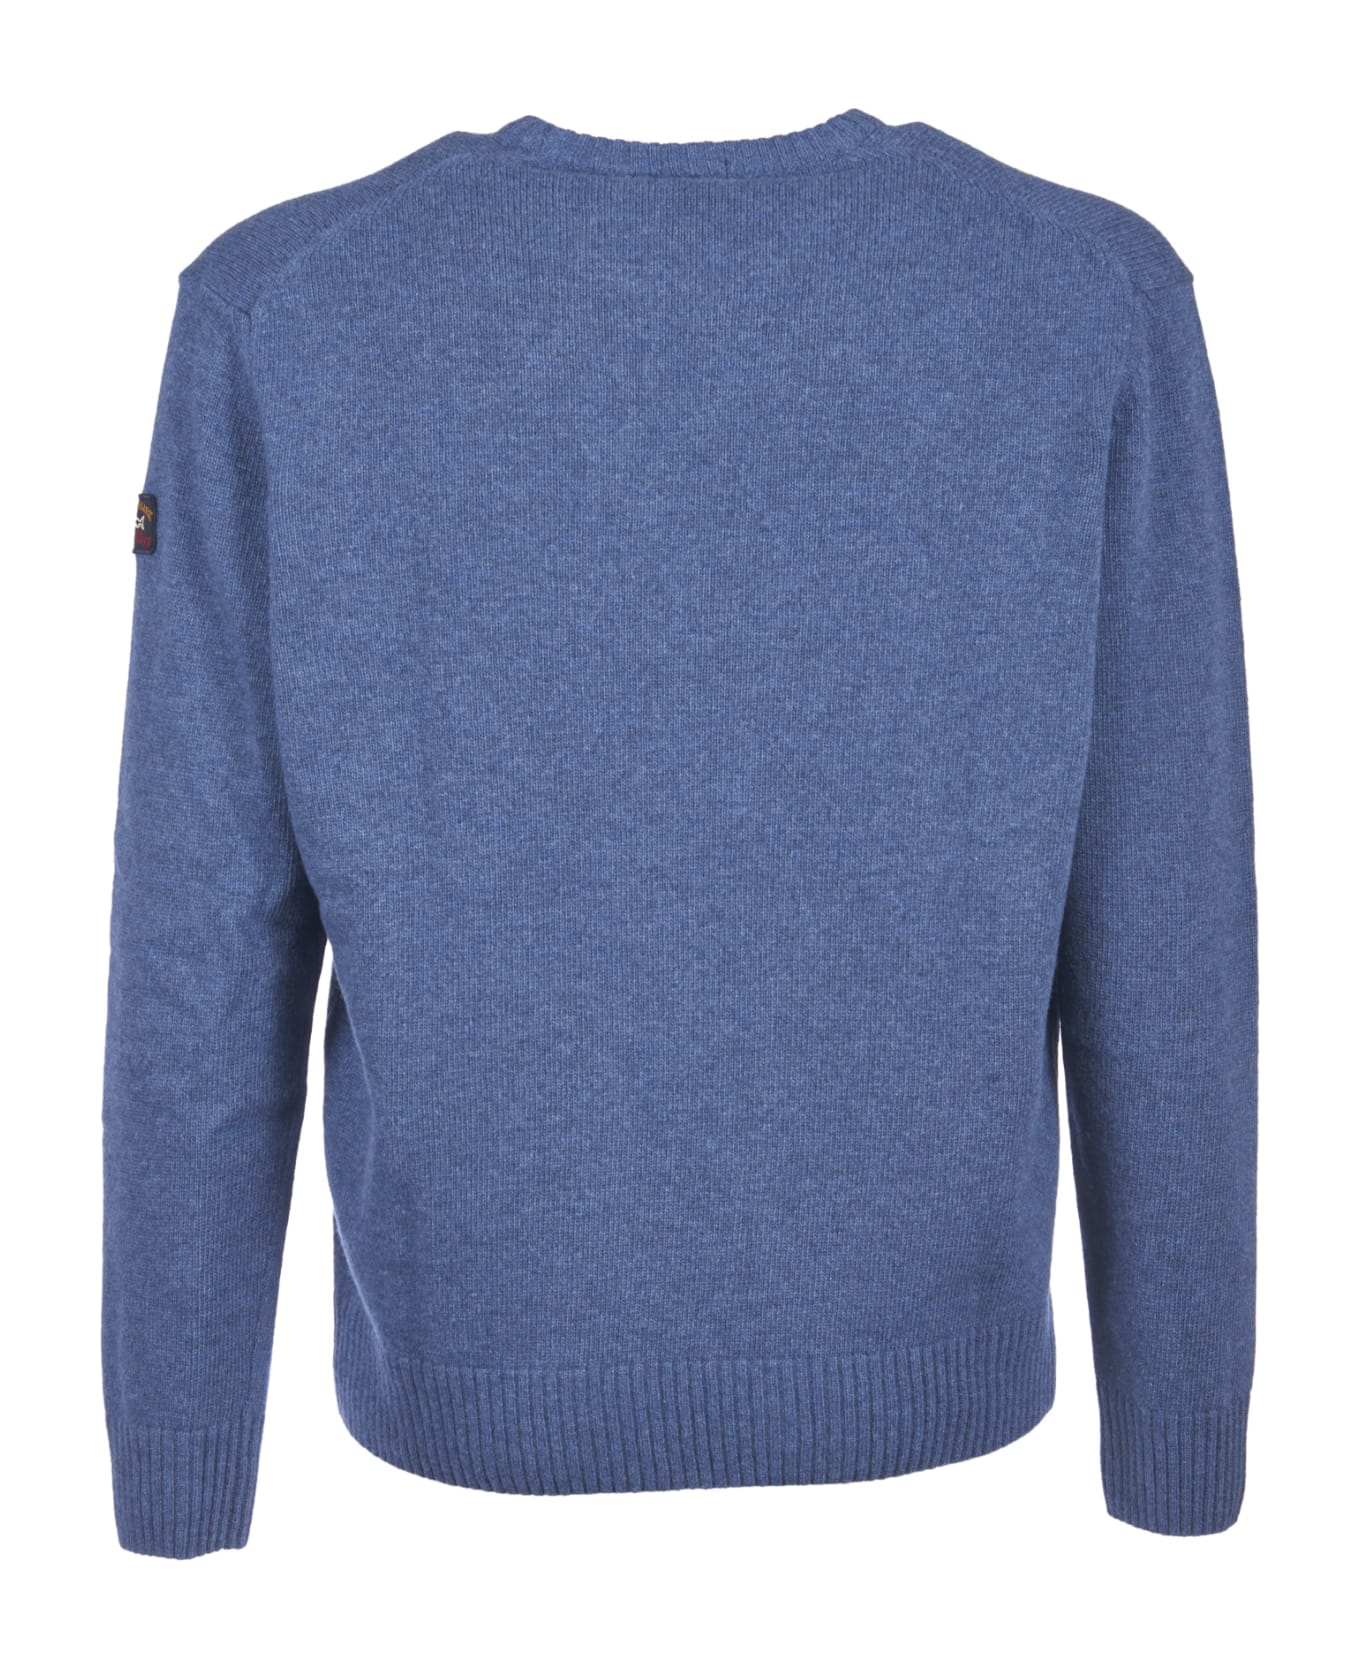 Paul&Shark Sweater With Application By Paul & Shark Sweater - AVIO ニットウェア